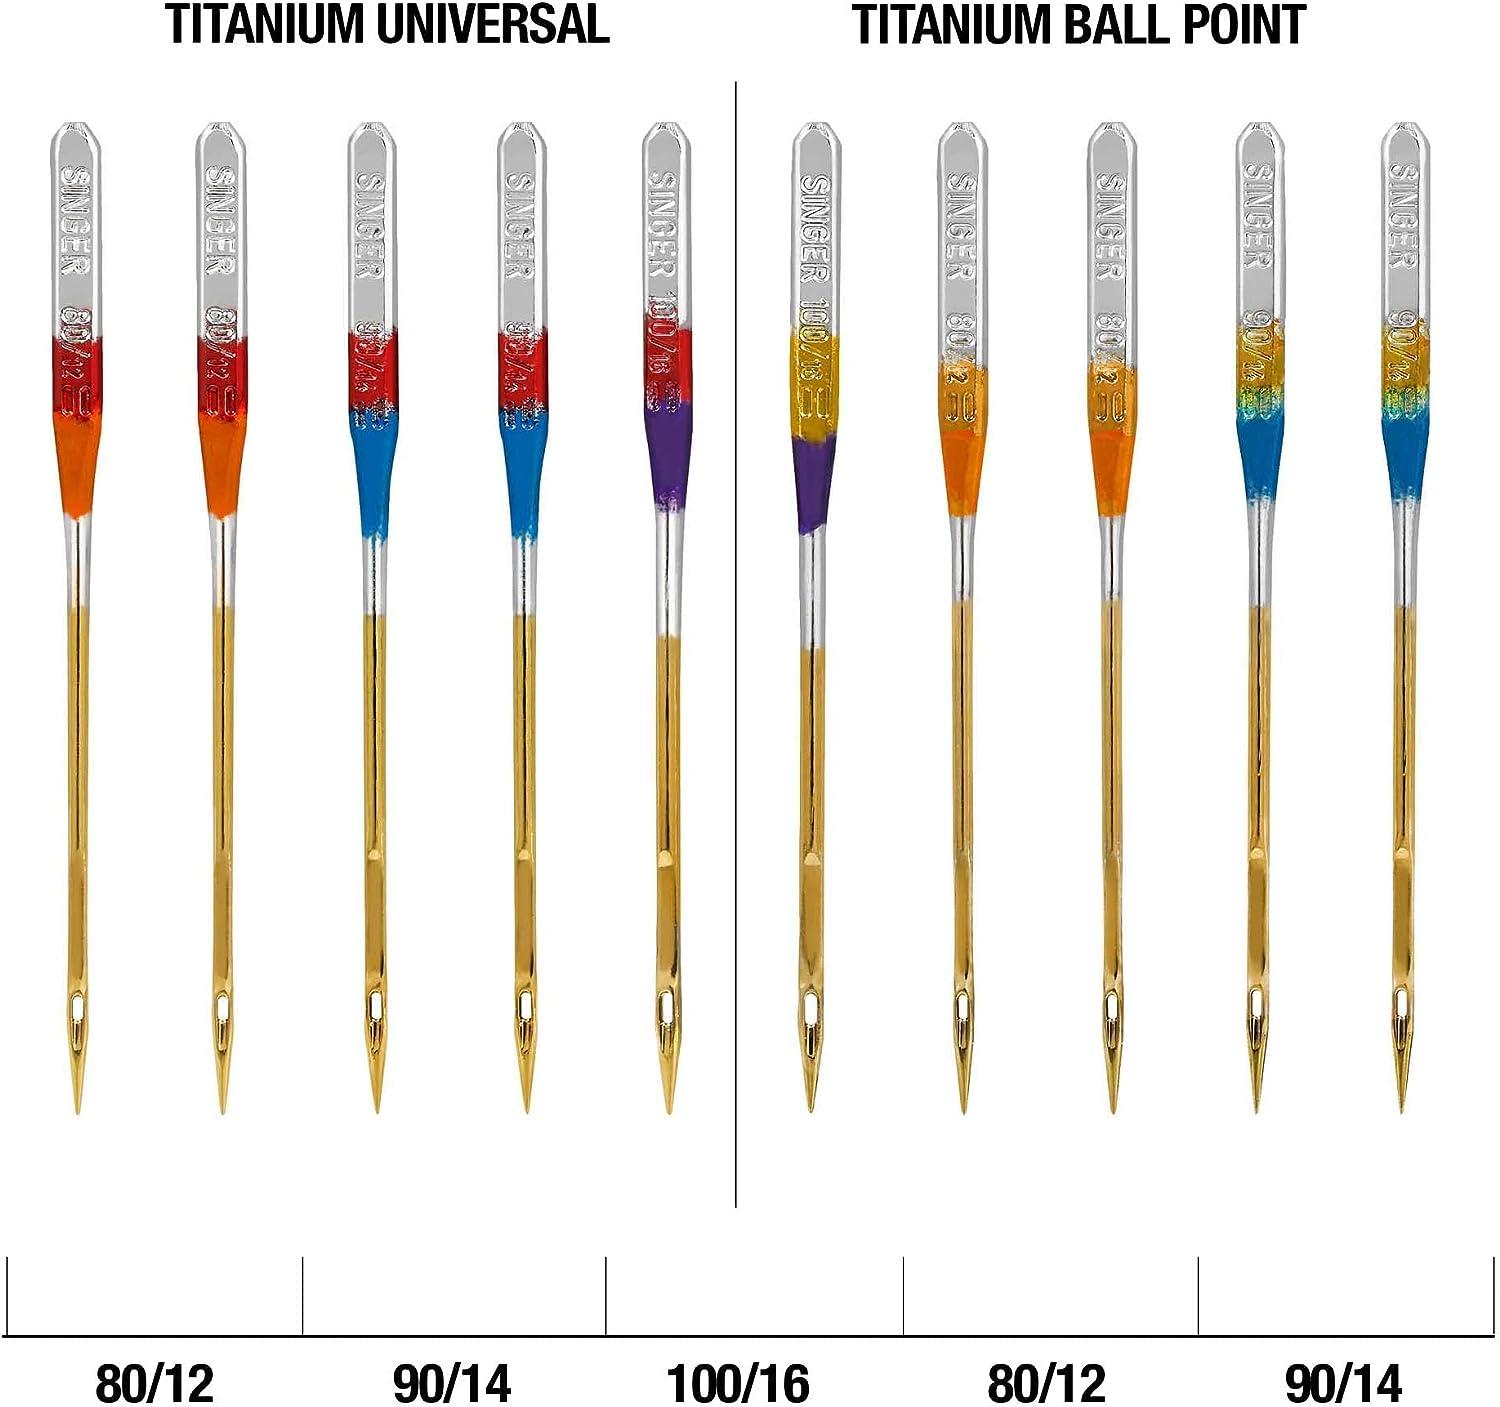 SINGER® Titanium Universal & Ball Point Needles, Assorted Sizes